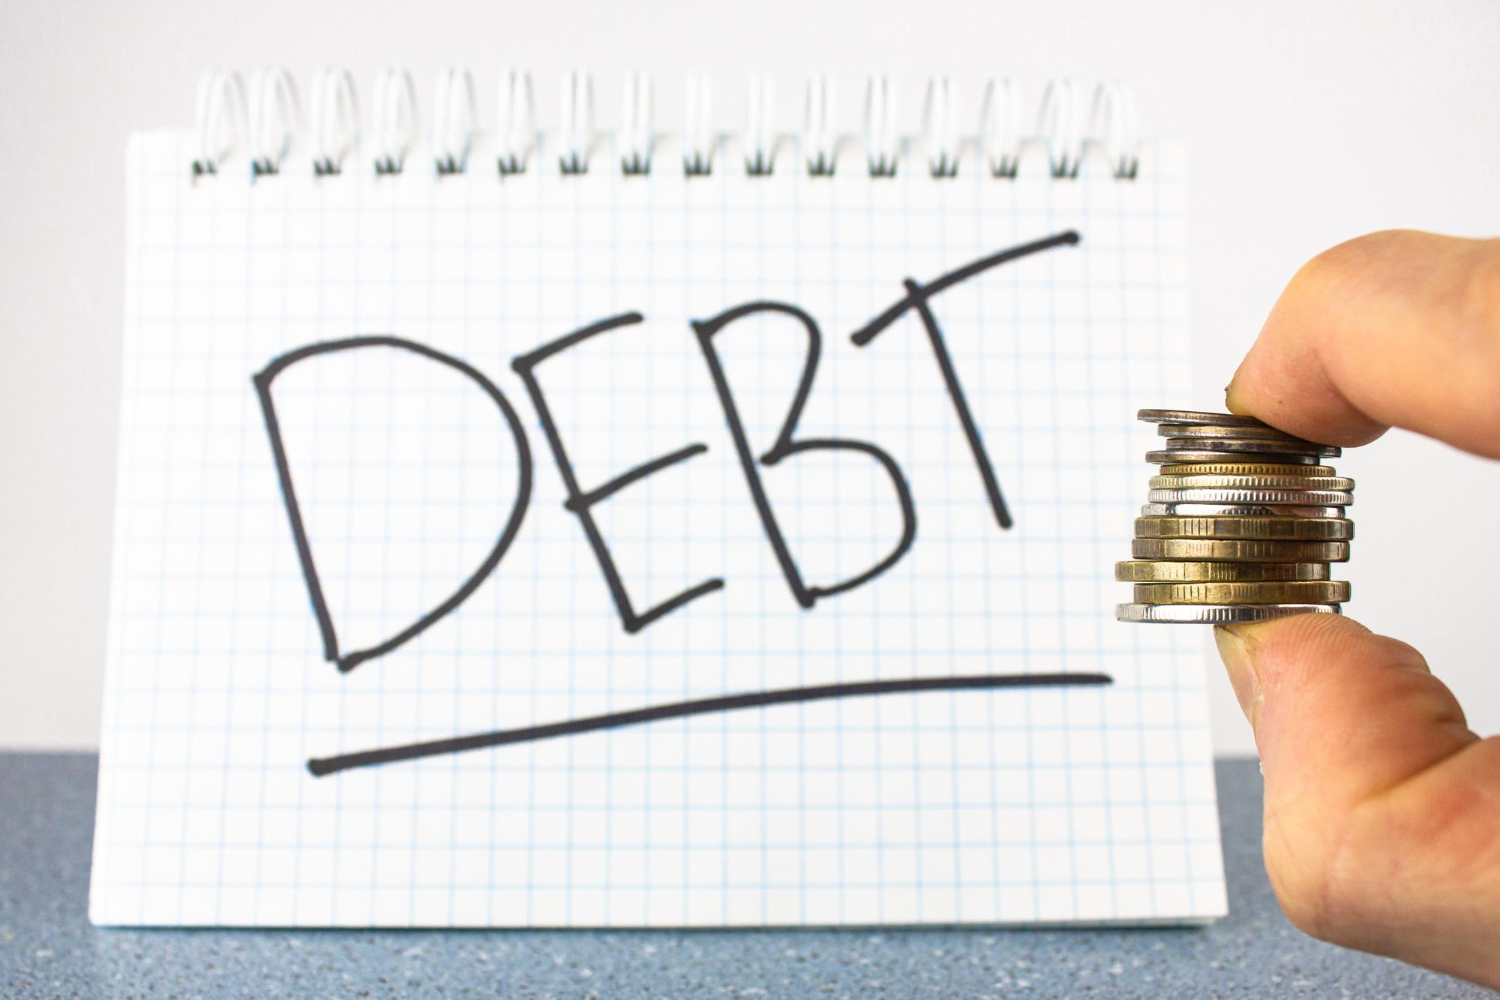 word-debt-notepad-coins-concept-debt-collection-payment-debts.jpg